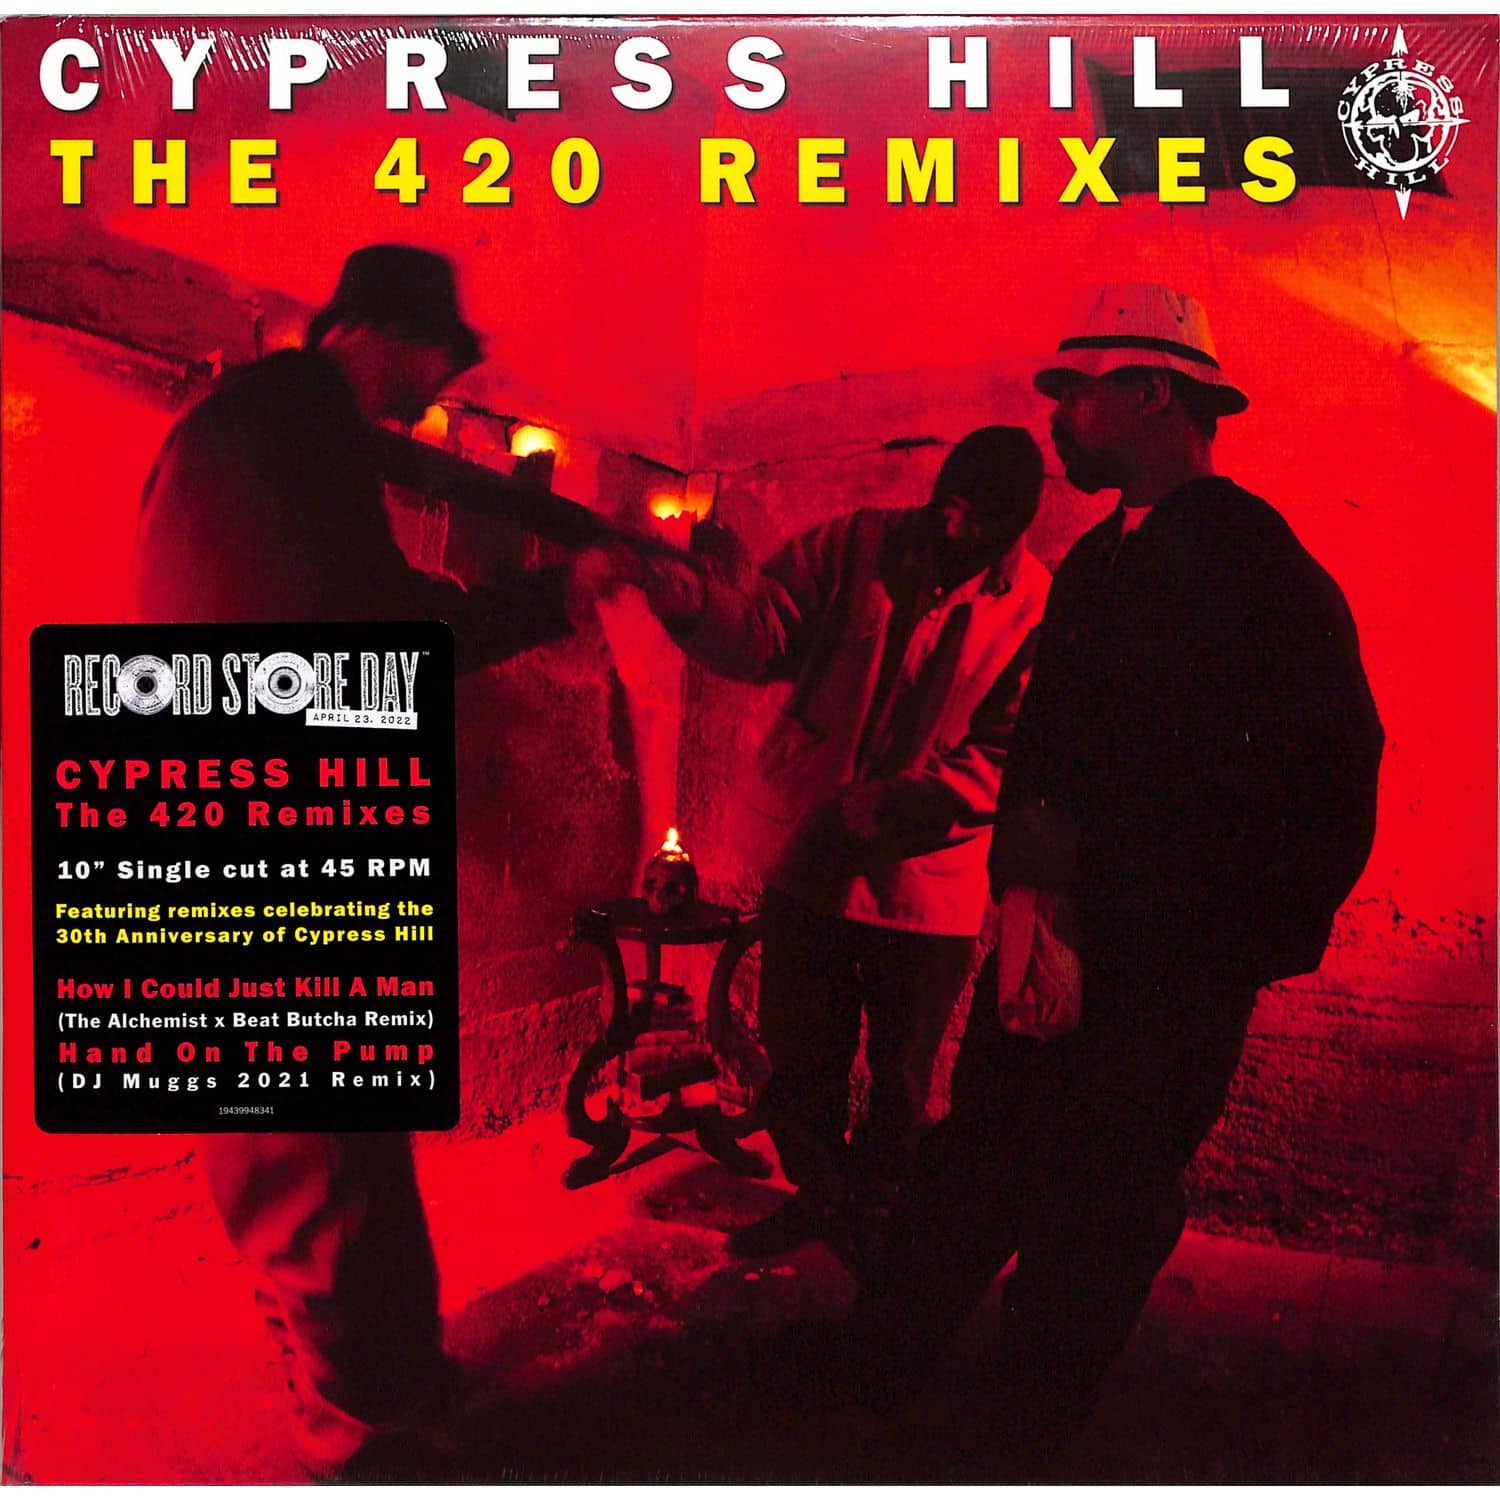 Cypress Hill - CYPRESS HILL THE 420 REMIXES 